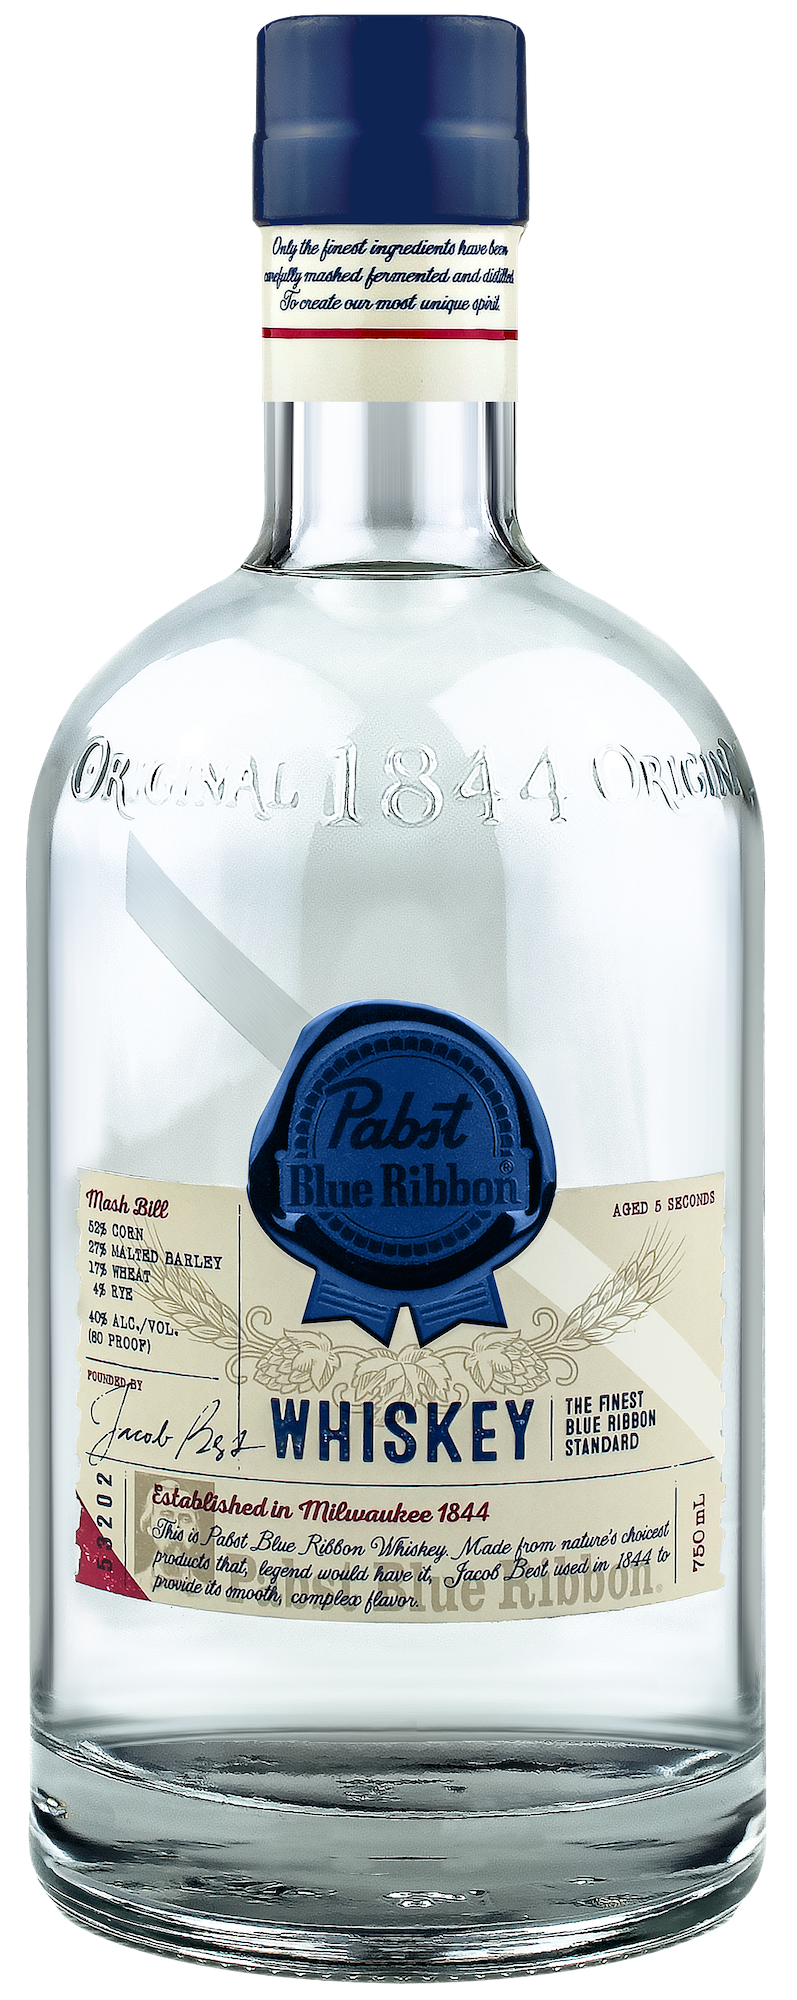 Pabst Blue Ribbon Whiskey (1)